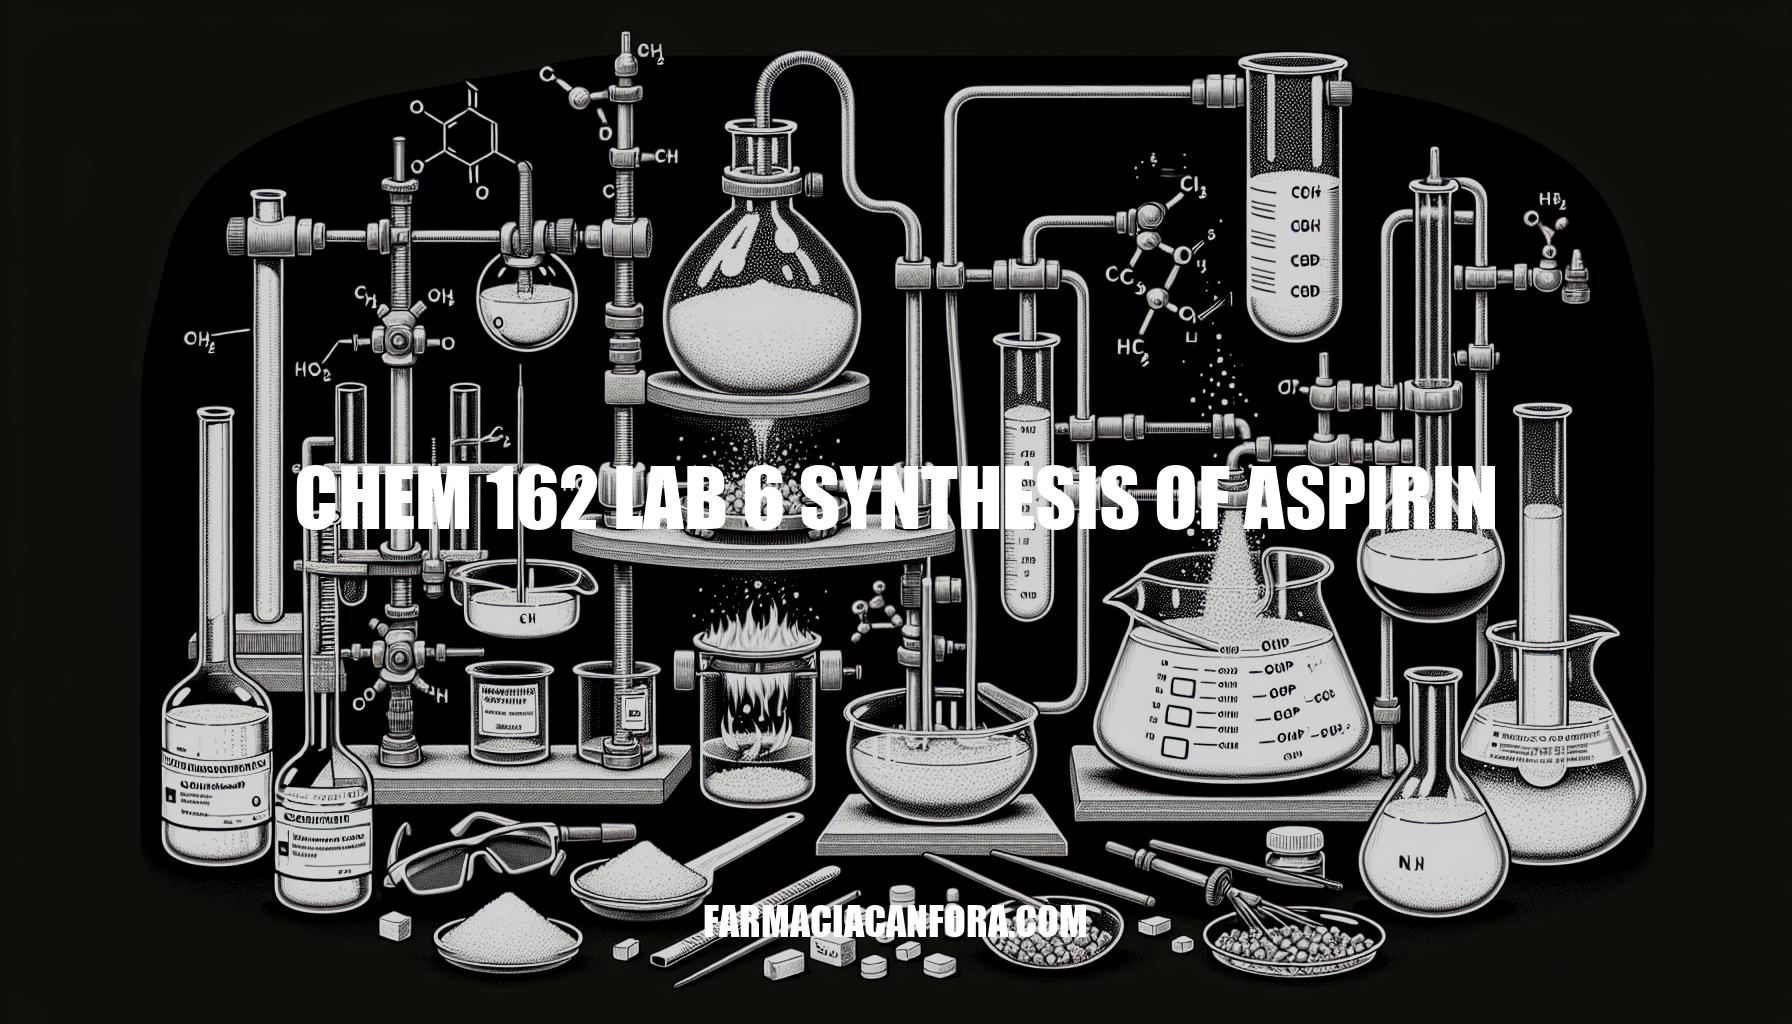 Chem 162 Lab 6 Synthesis of Aspirin